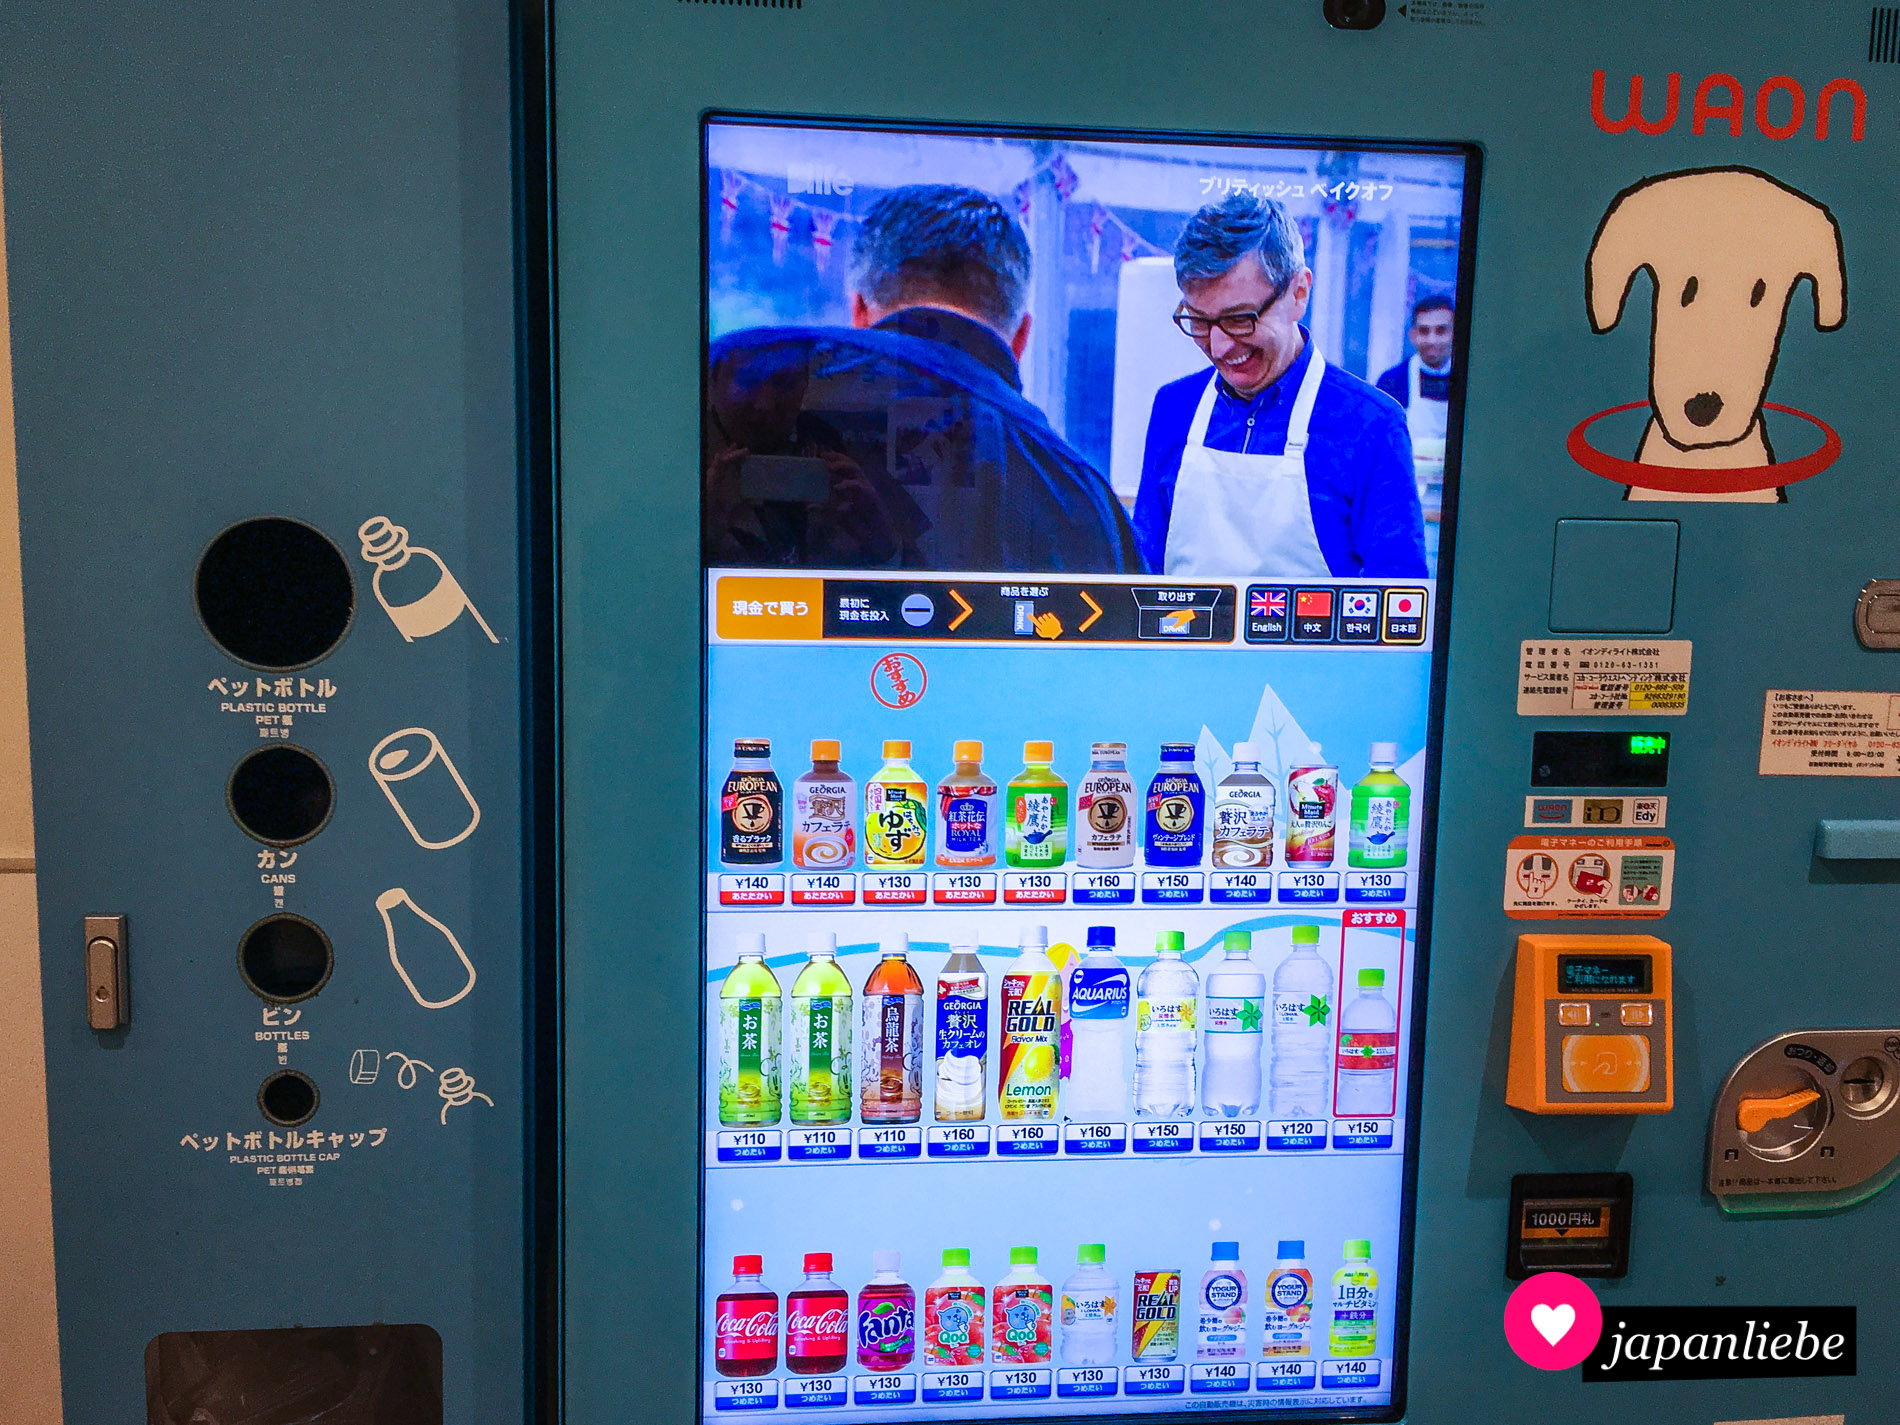 An diesem modernen Getränkeautomat in Japan wählt man das gewünschte Produkt per Touch Screen, während im oberen Teil des Screens ein Entertainment-Programm läuft.